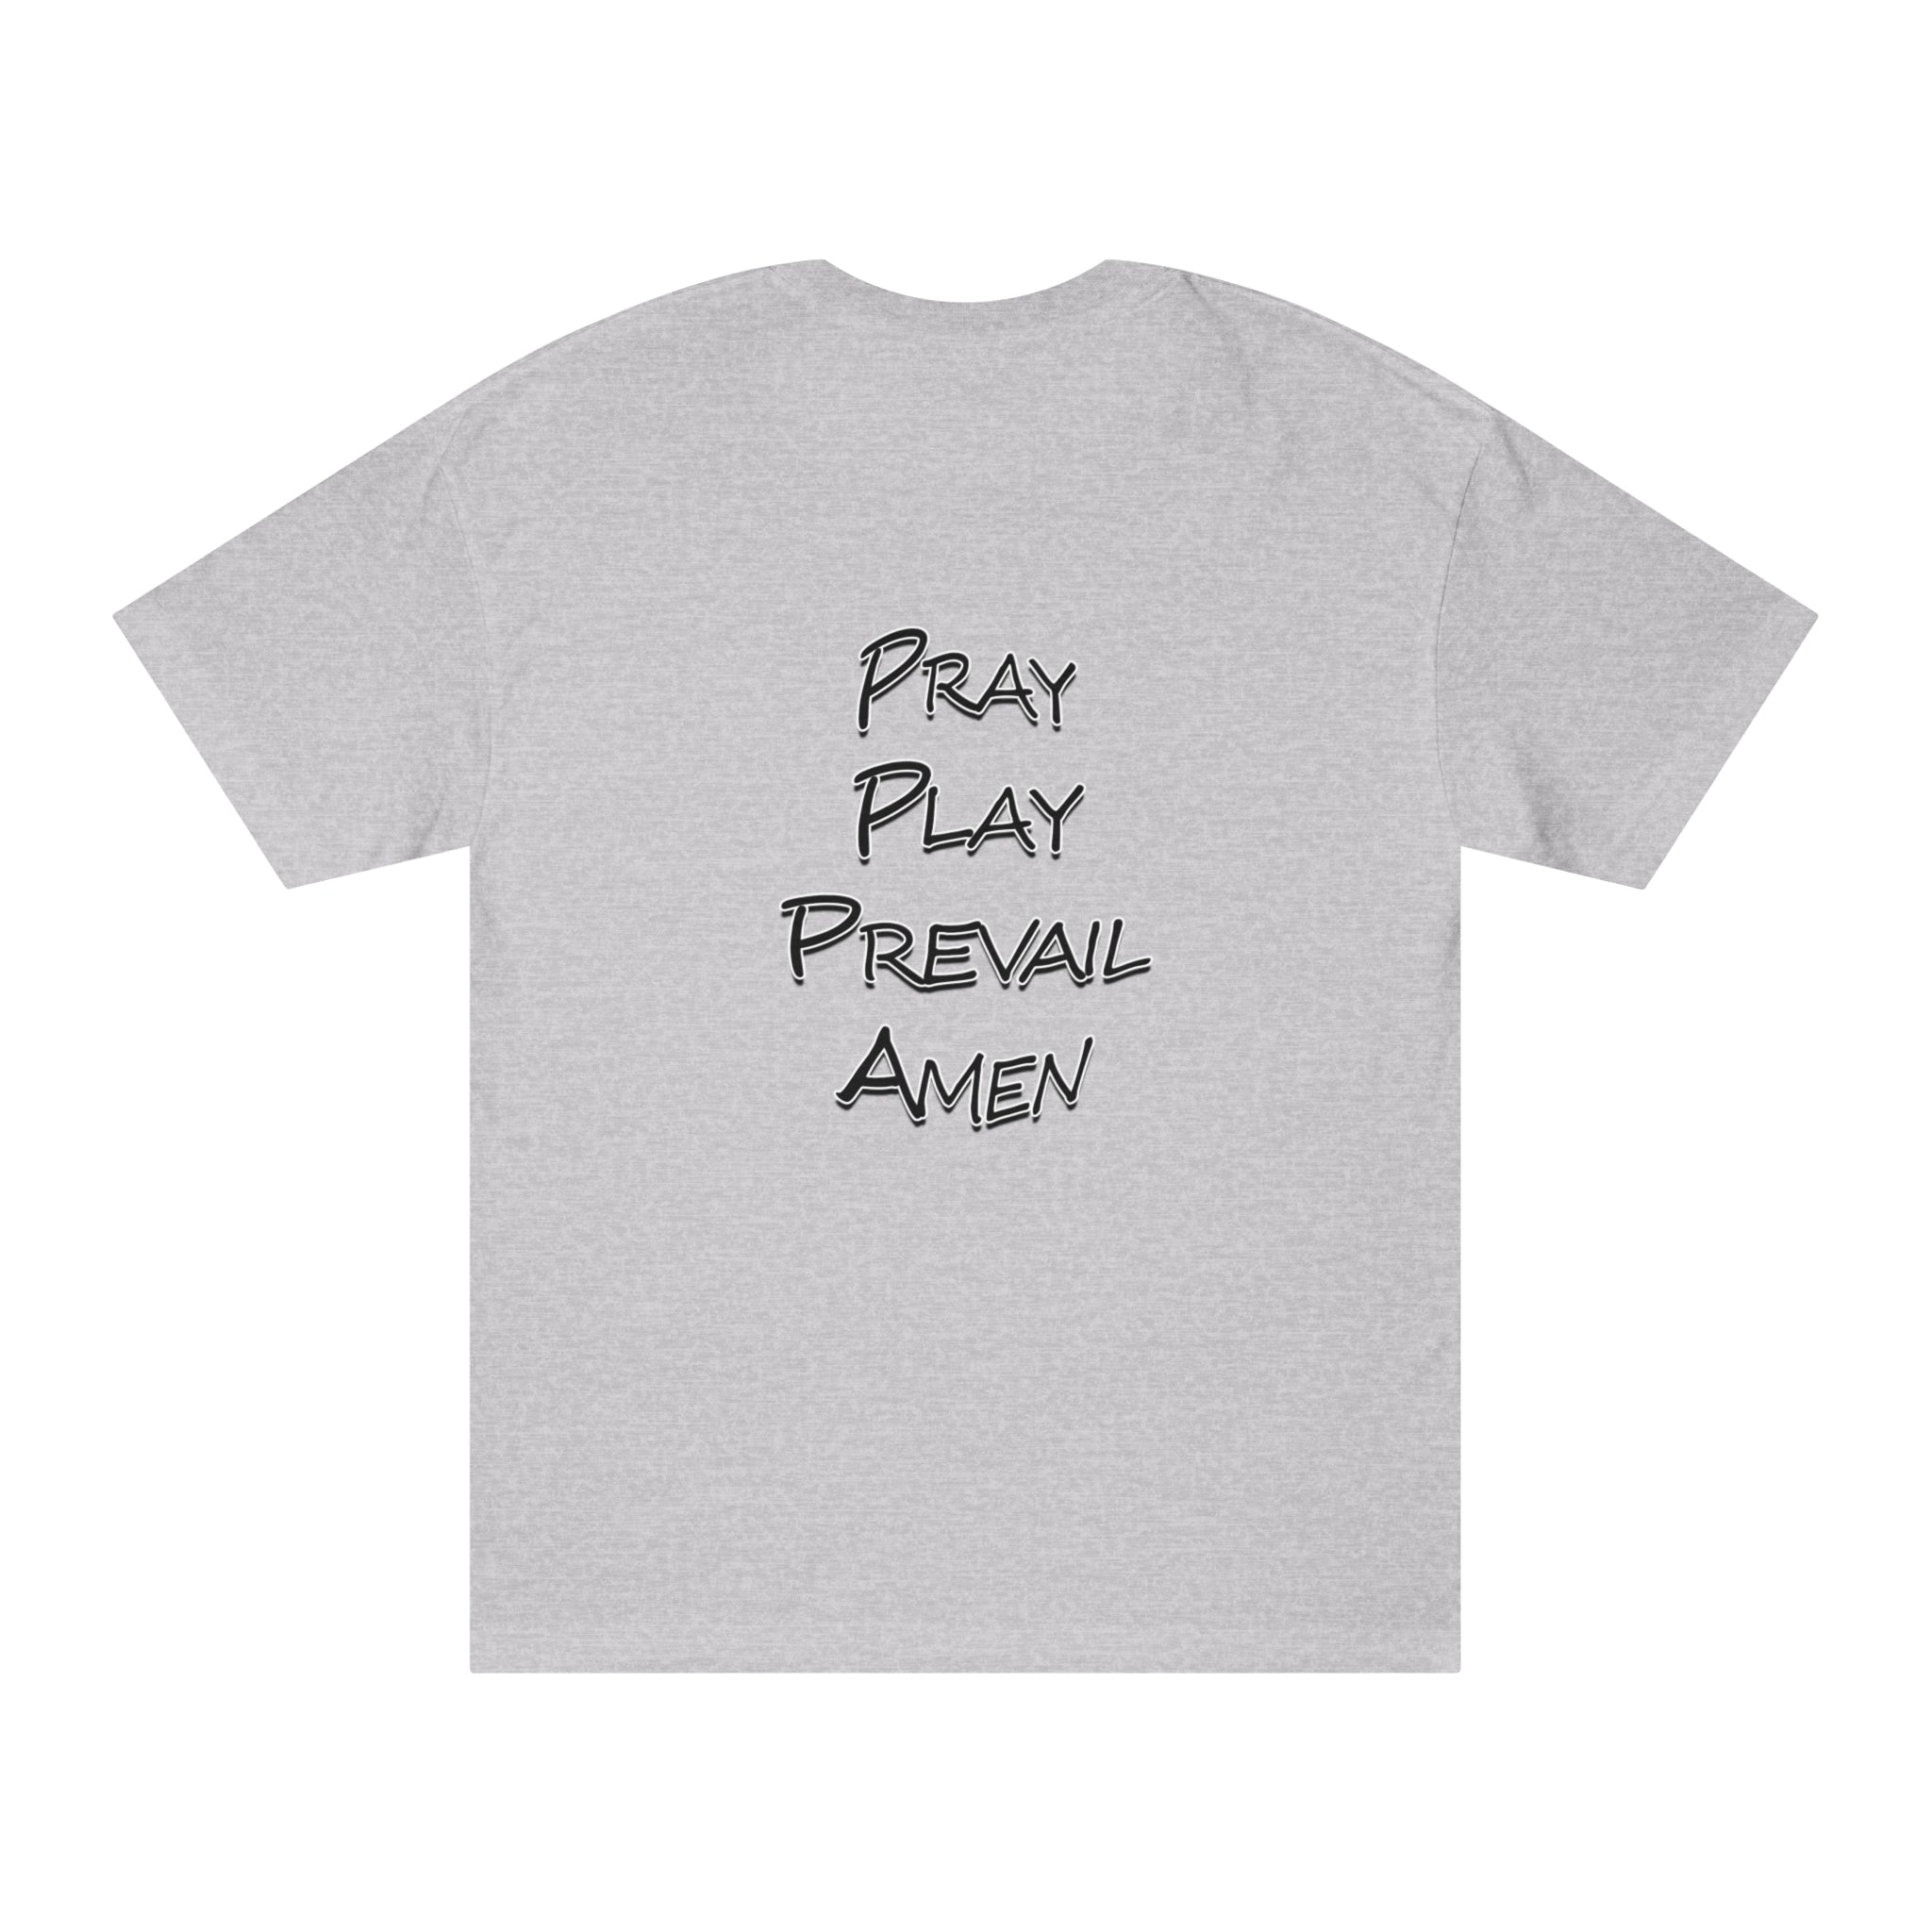 Play Pray Prevail Amen Classic Tee